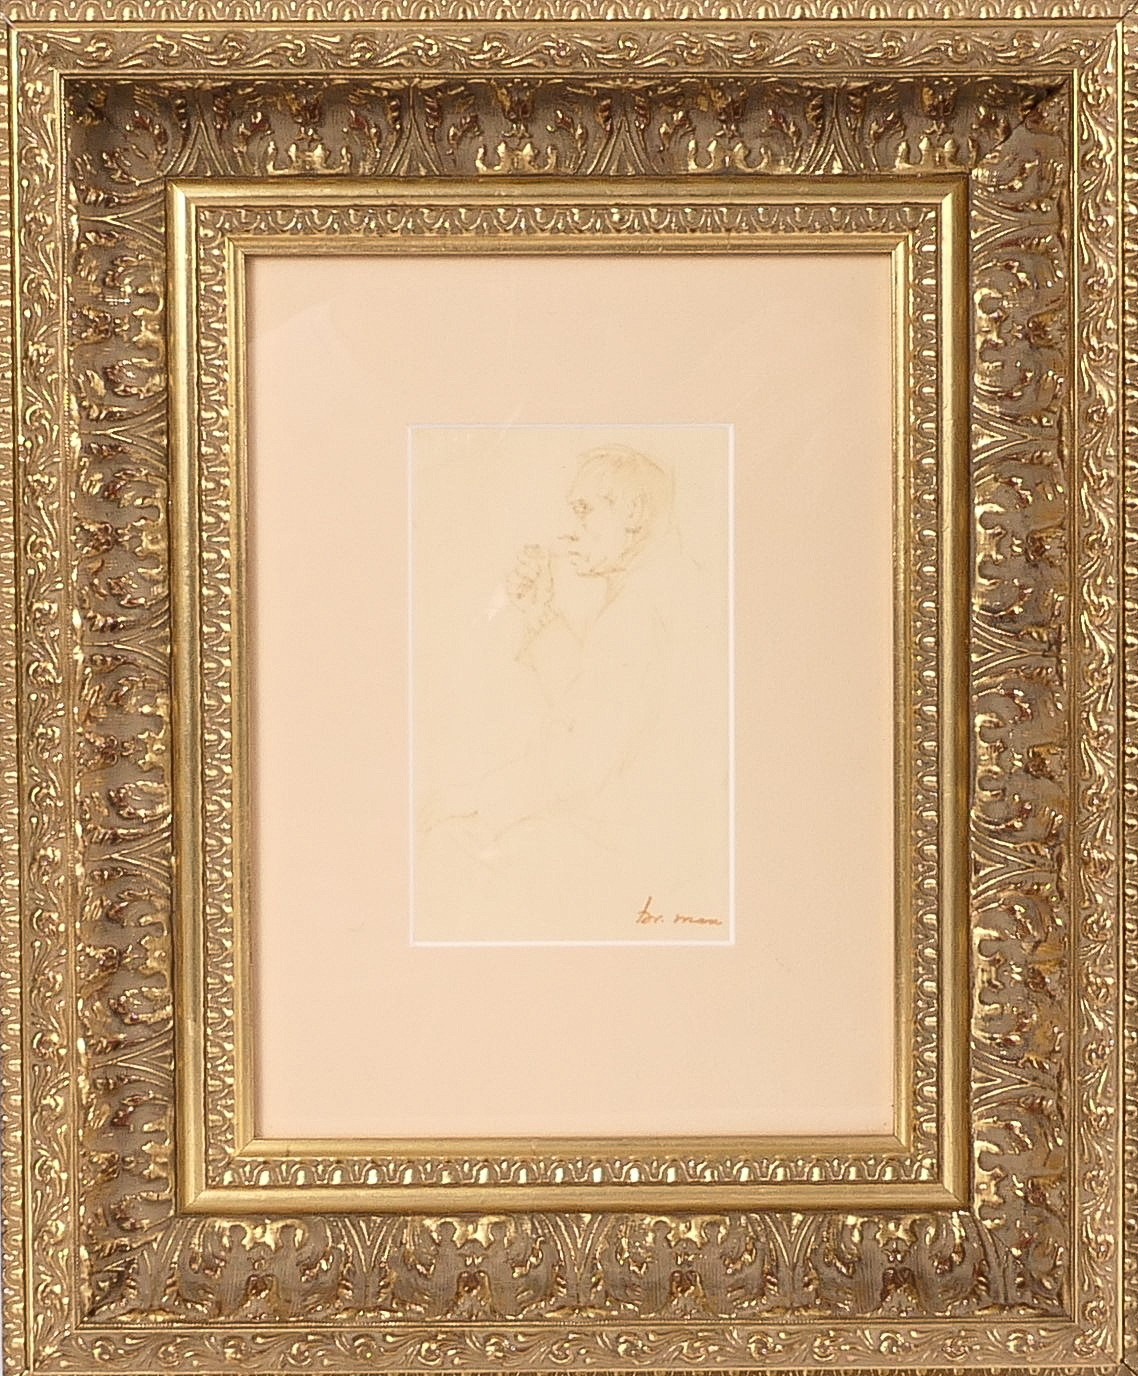 Max Br., portrait of a man, bistre on paper, 8 x 13 cm - Image 7 of 7